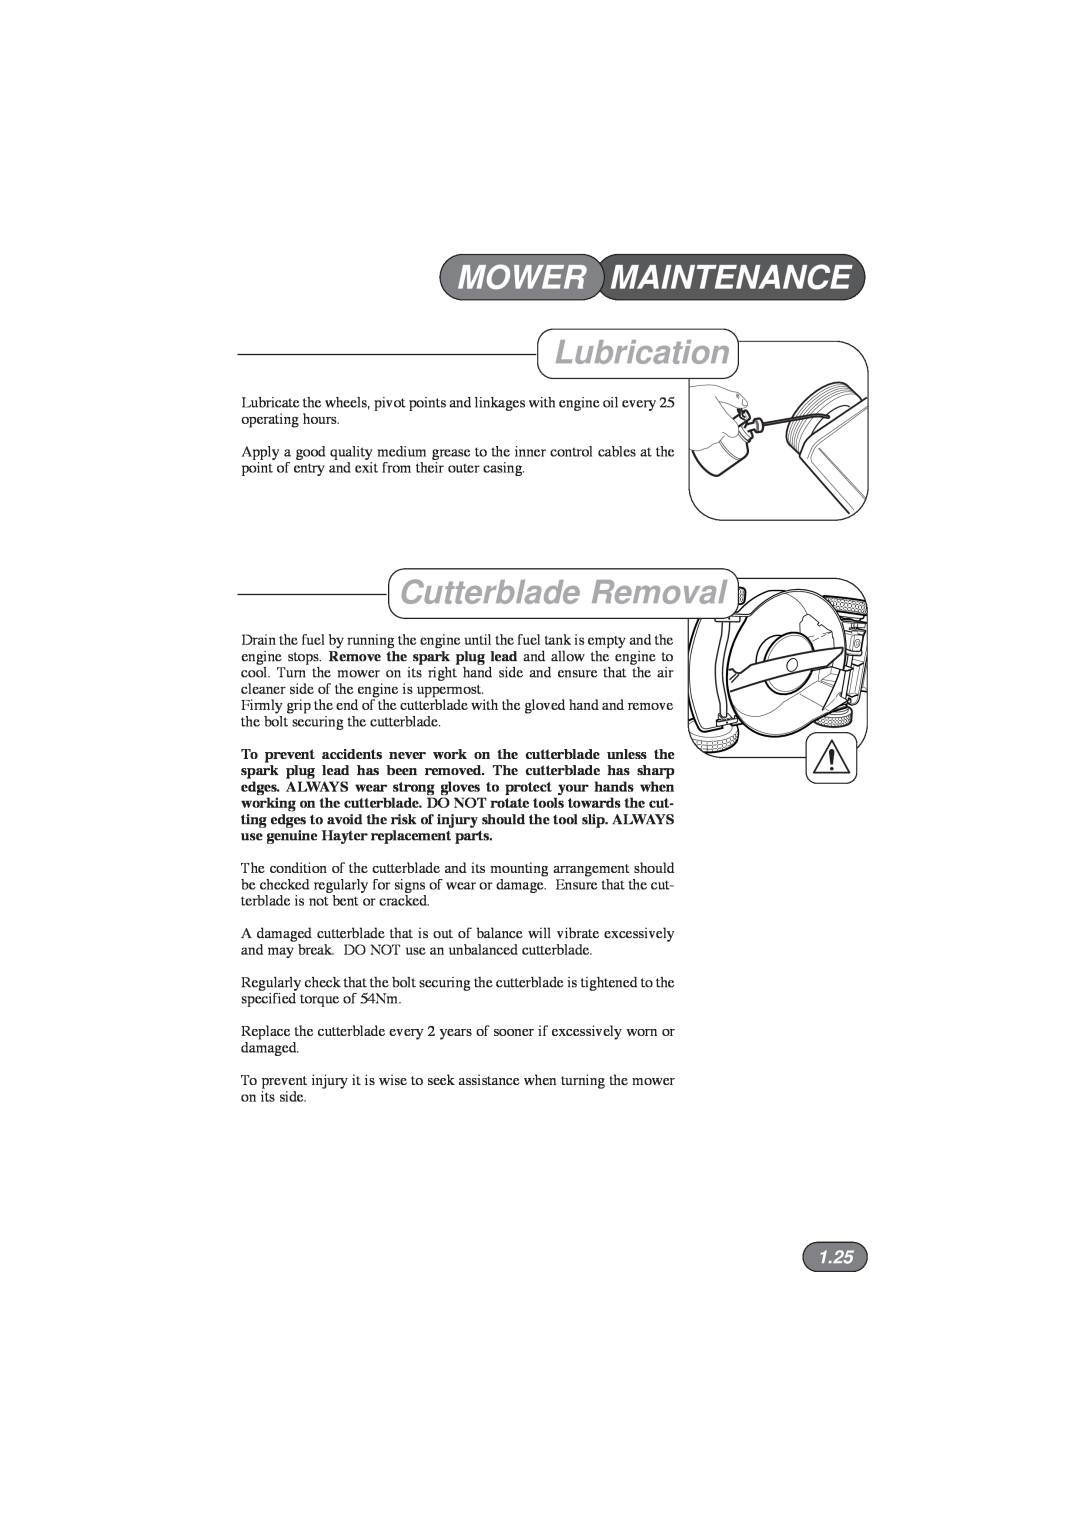 Hayter Mowers 432E, 435E, 434E, 433E manual Lubrication, Cutterblade Removal, 1.25, Mower Maintenance 